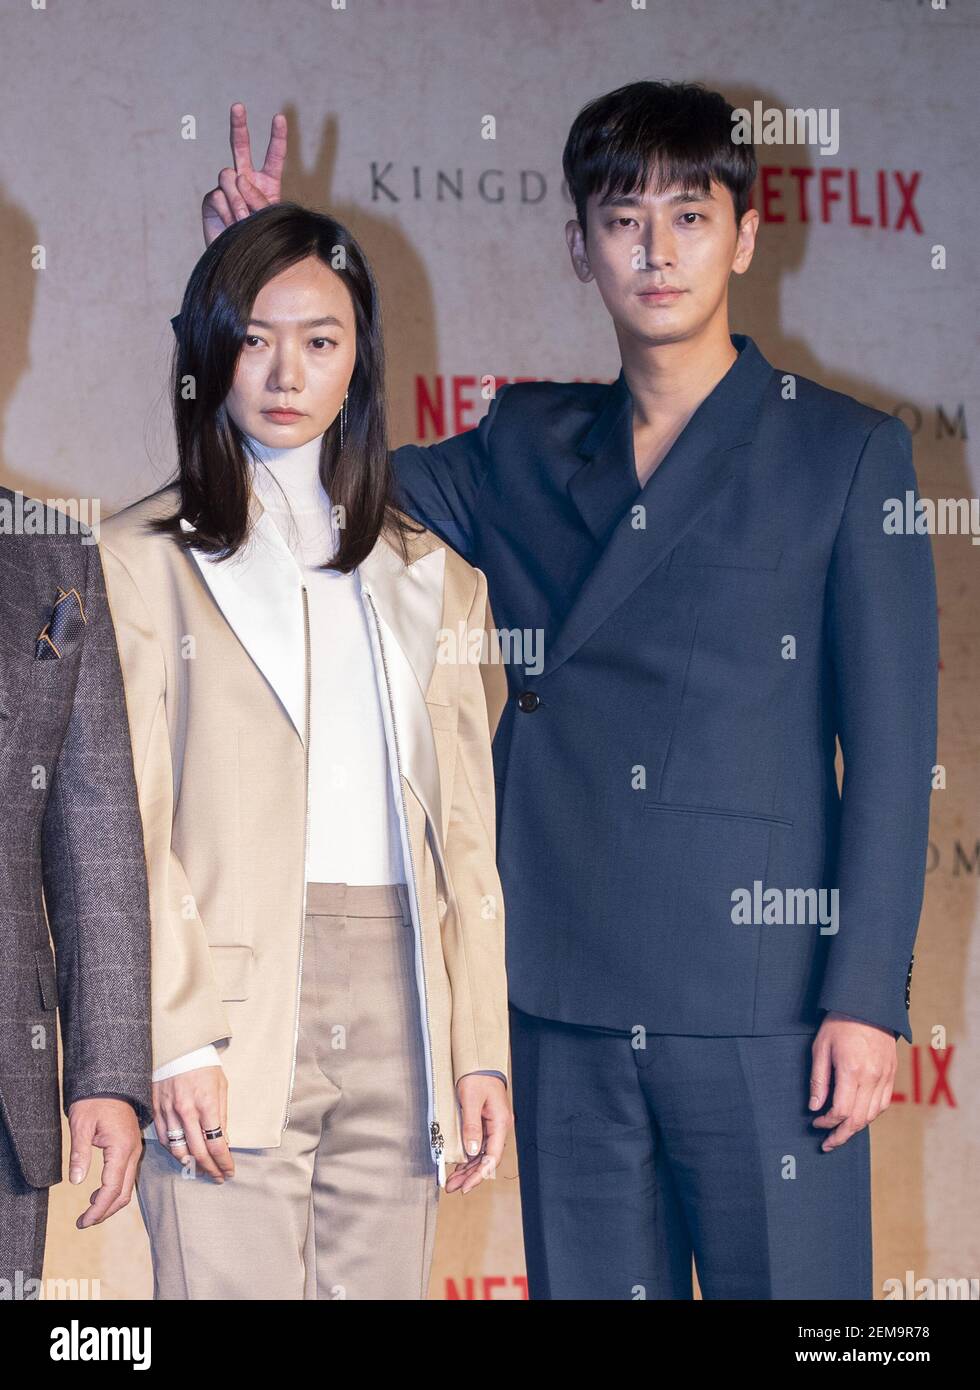 Bae Doona On Acting In Netflix's “Kingdom,” Her First Sageuk: “Joo Ji Hoon  Laughed A Lot”